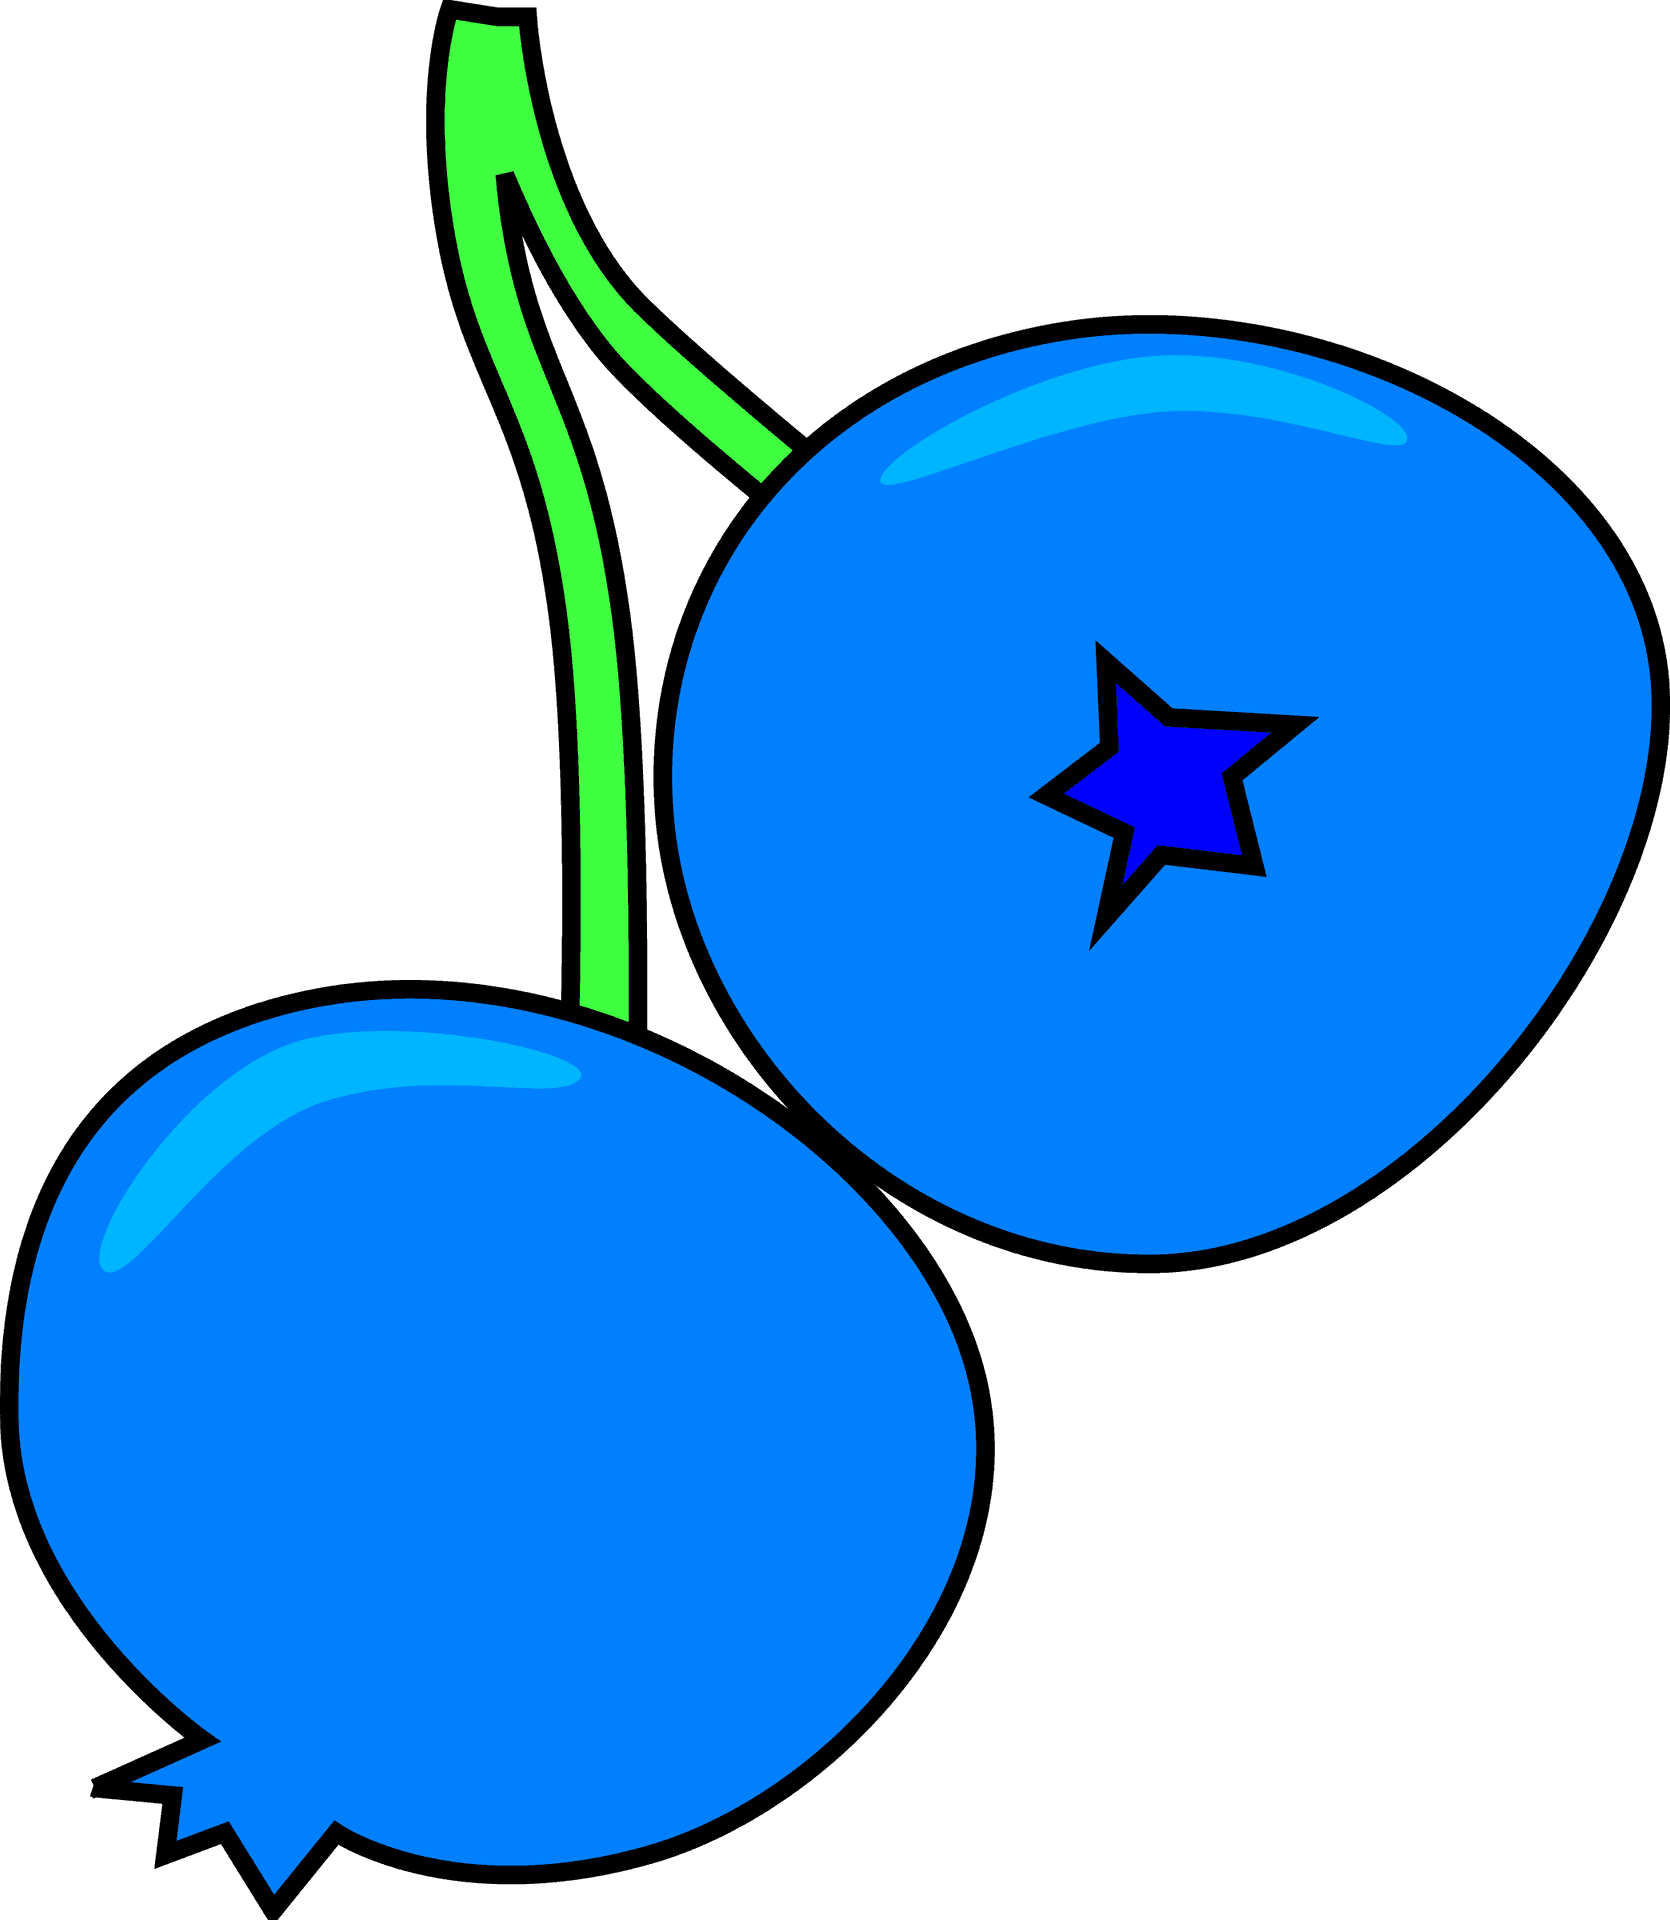 Cartoon Blueberries Illustration PNG